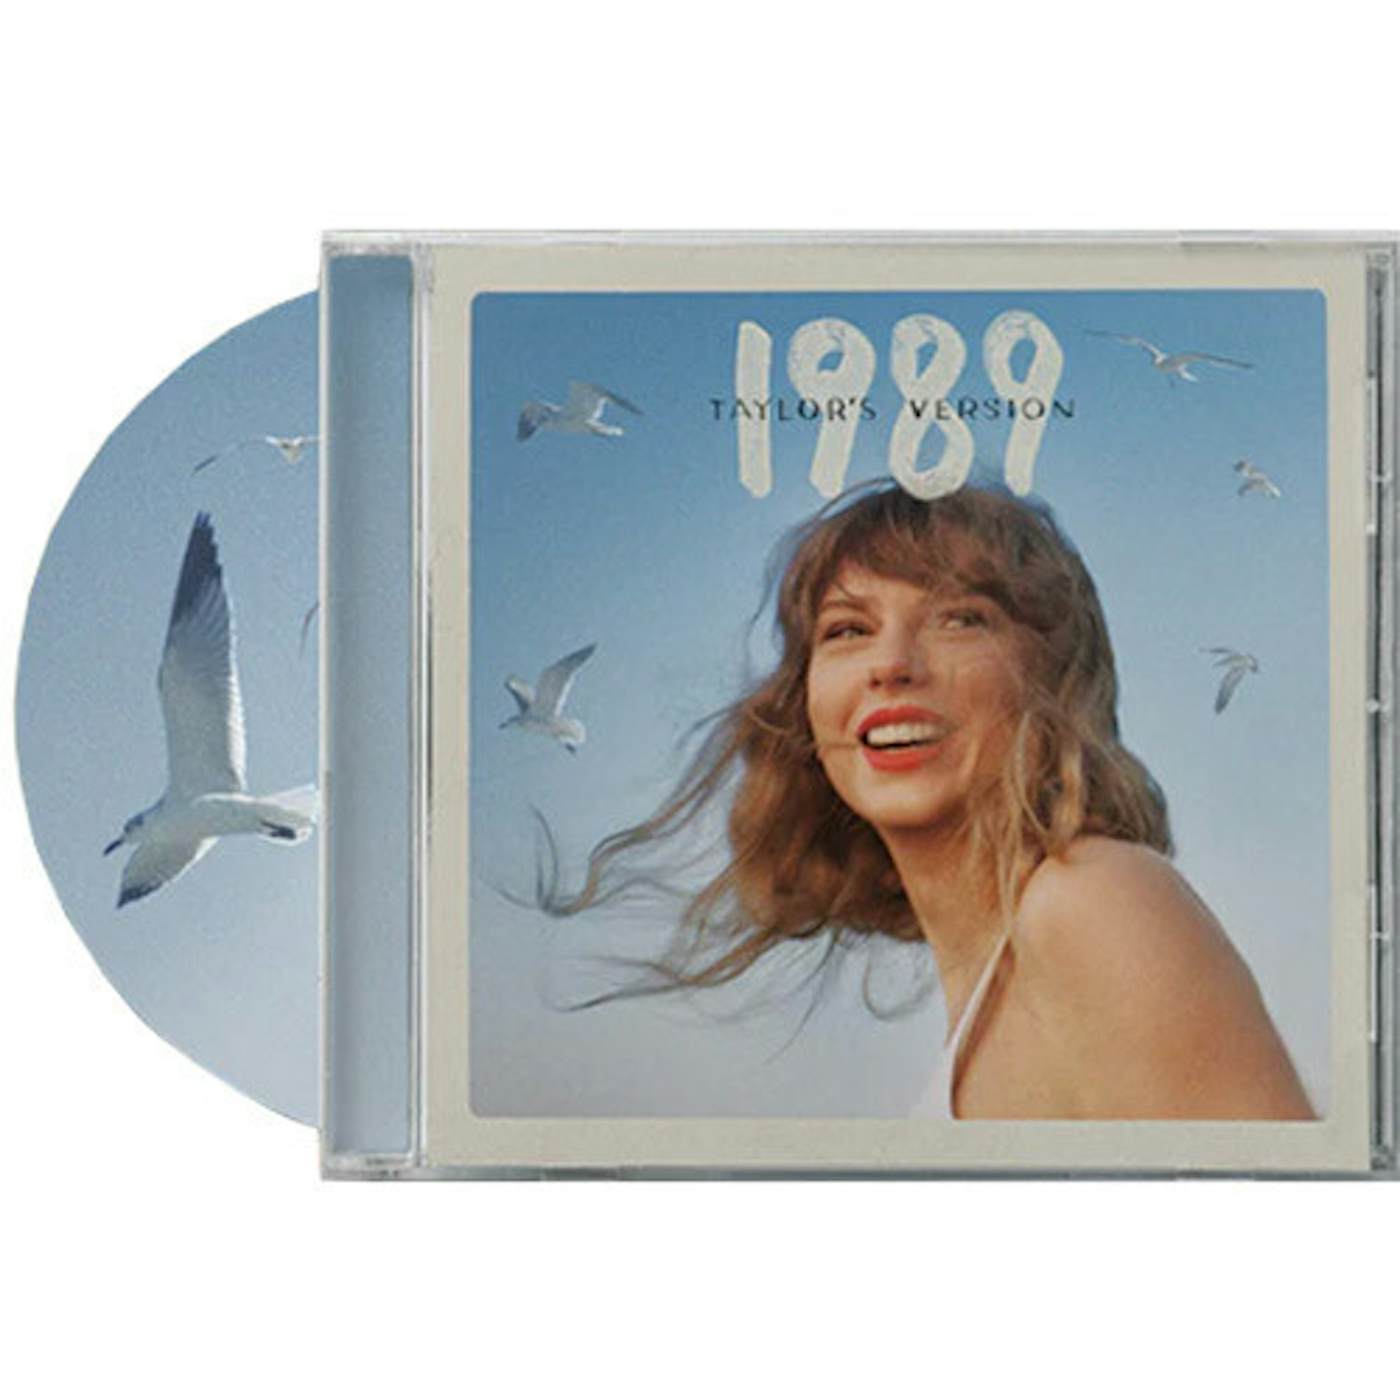 Taylor Swift 1989 (TAYLOR'S VERSION) CD